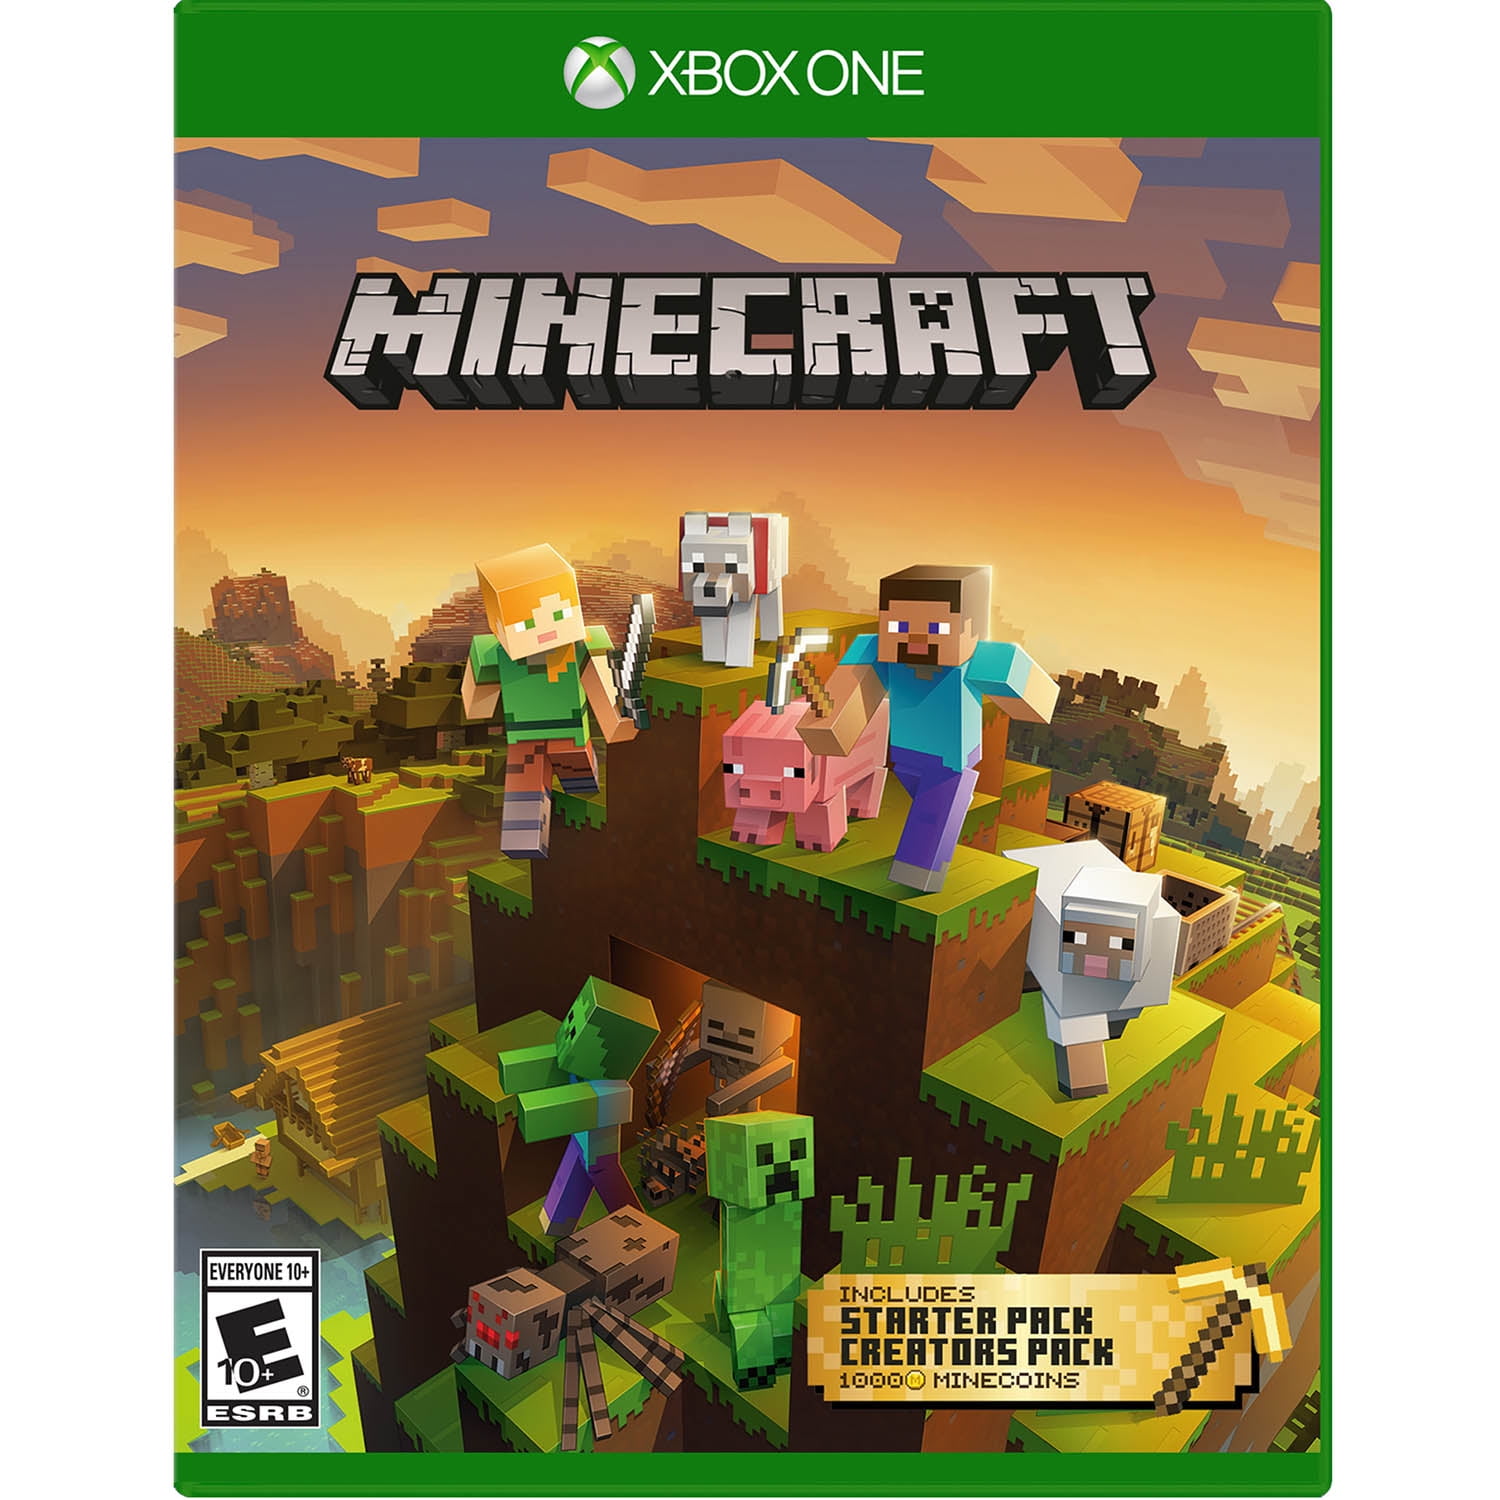 Jogos - Minecraft (Xbox 360) Gameplay